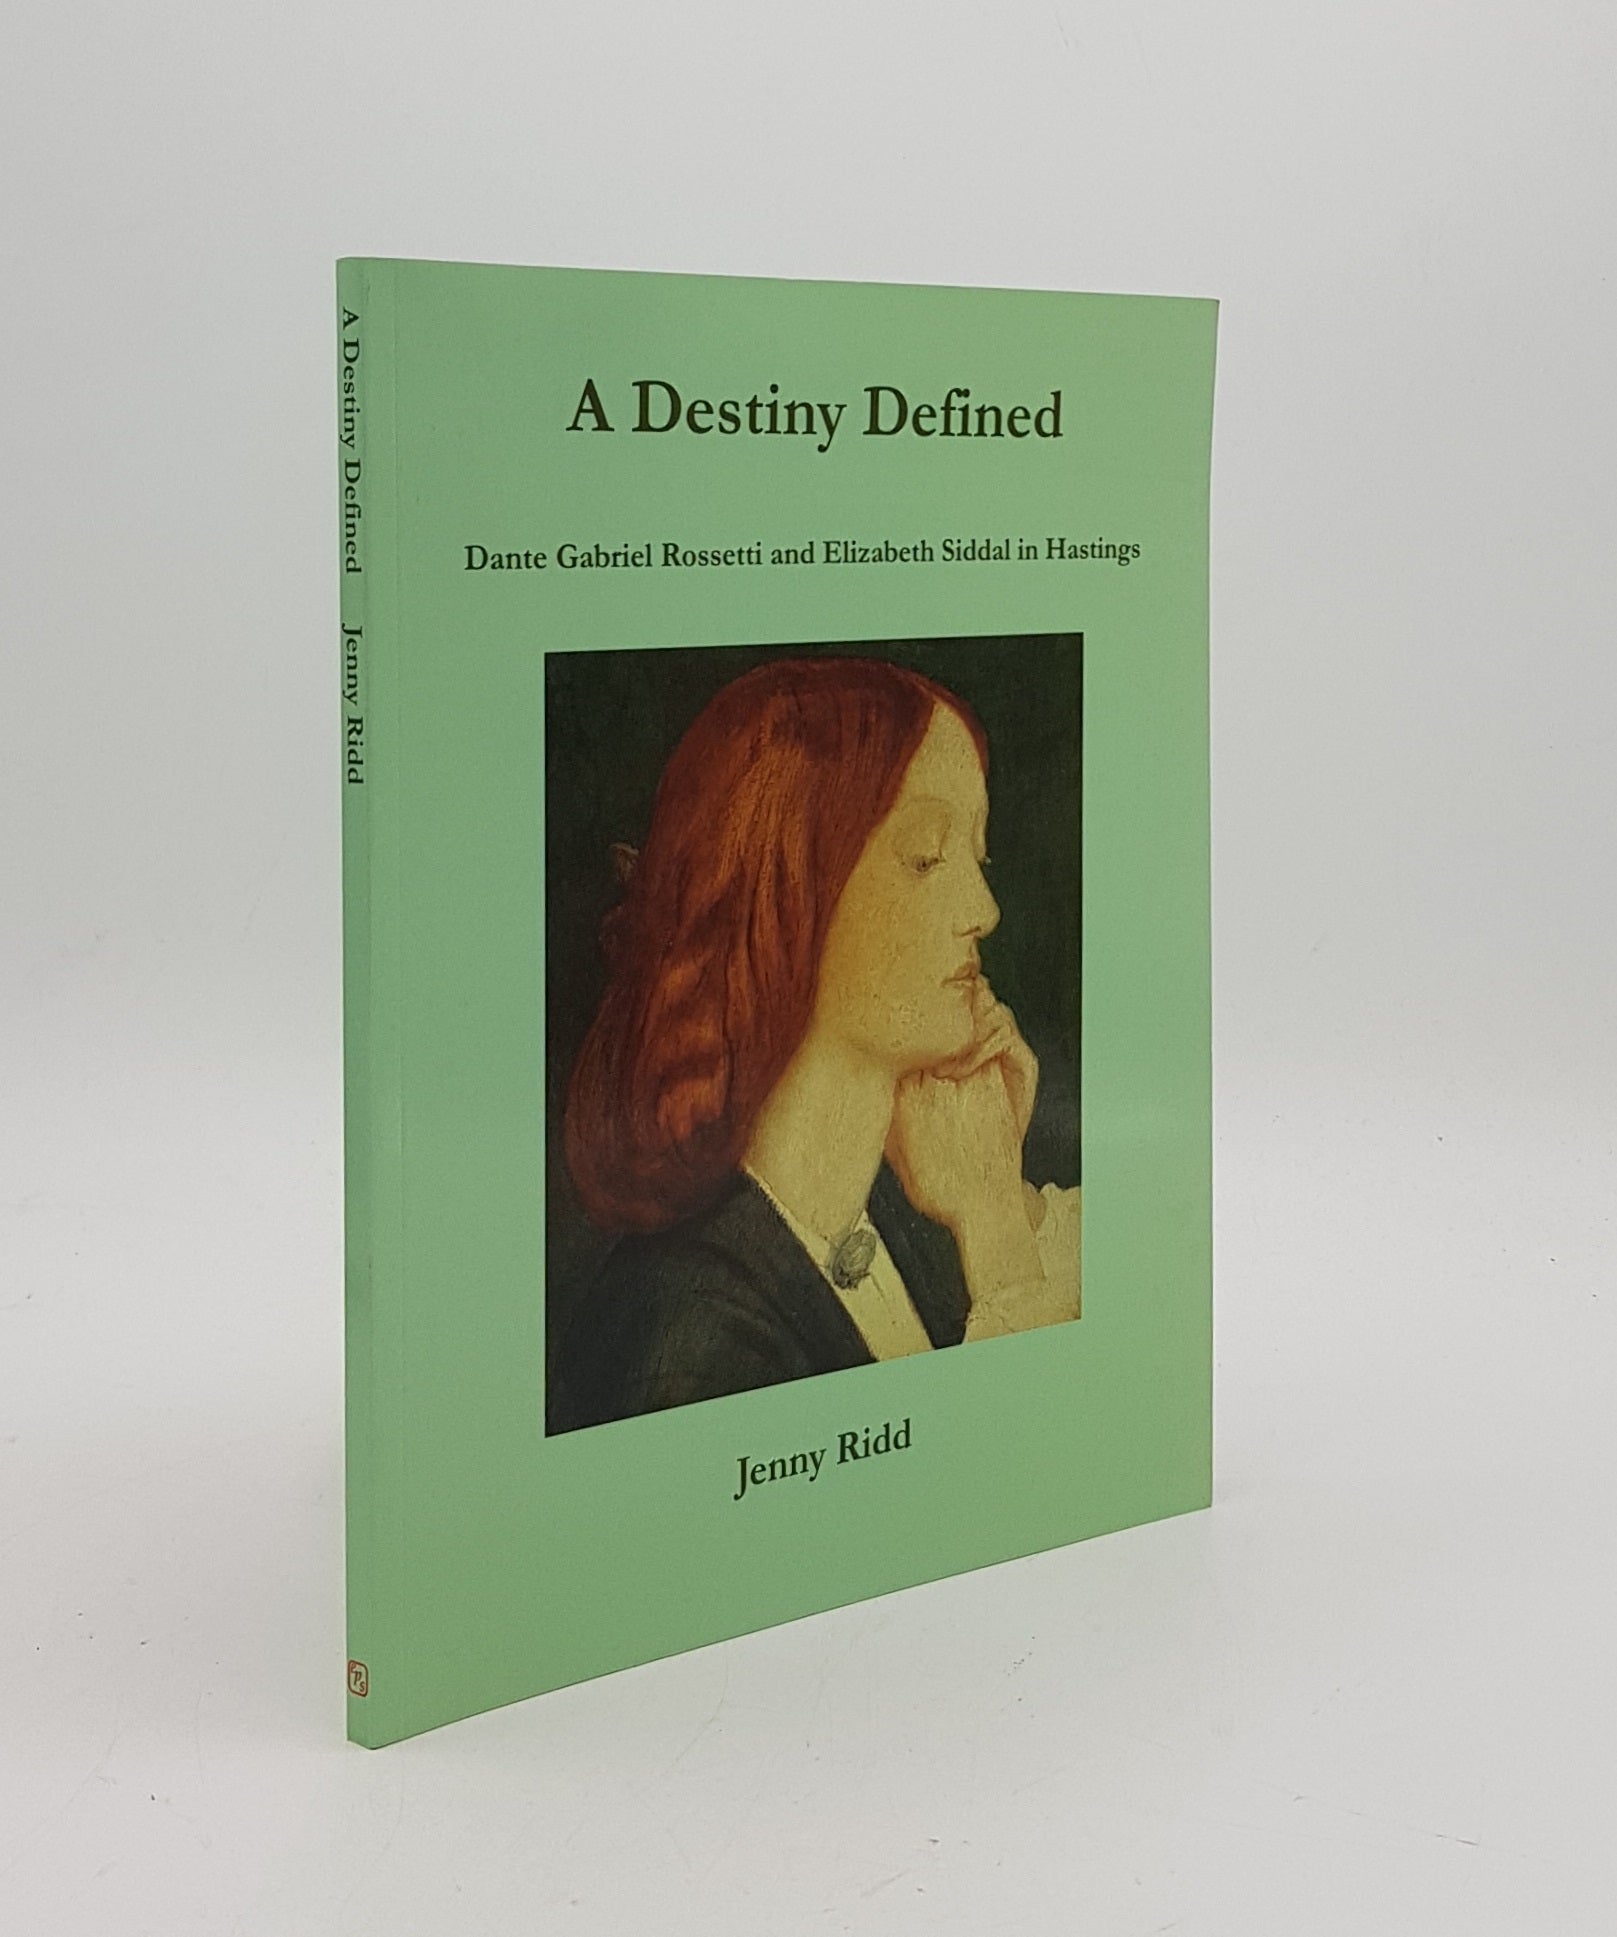 RIDD Jenny - A Destiny Defined Dante Gabriel Rossetti and Elizabeth Siddal in Hastings